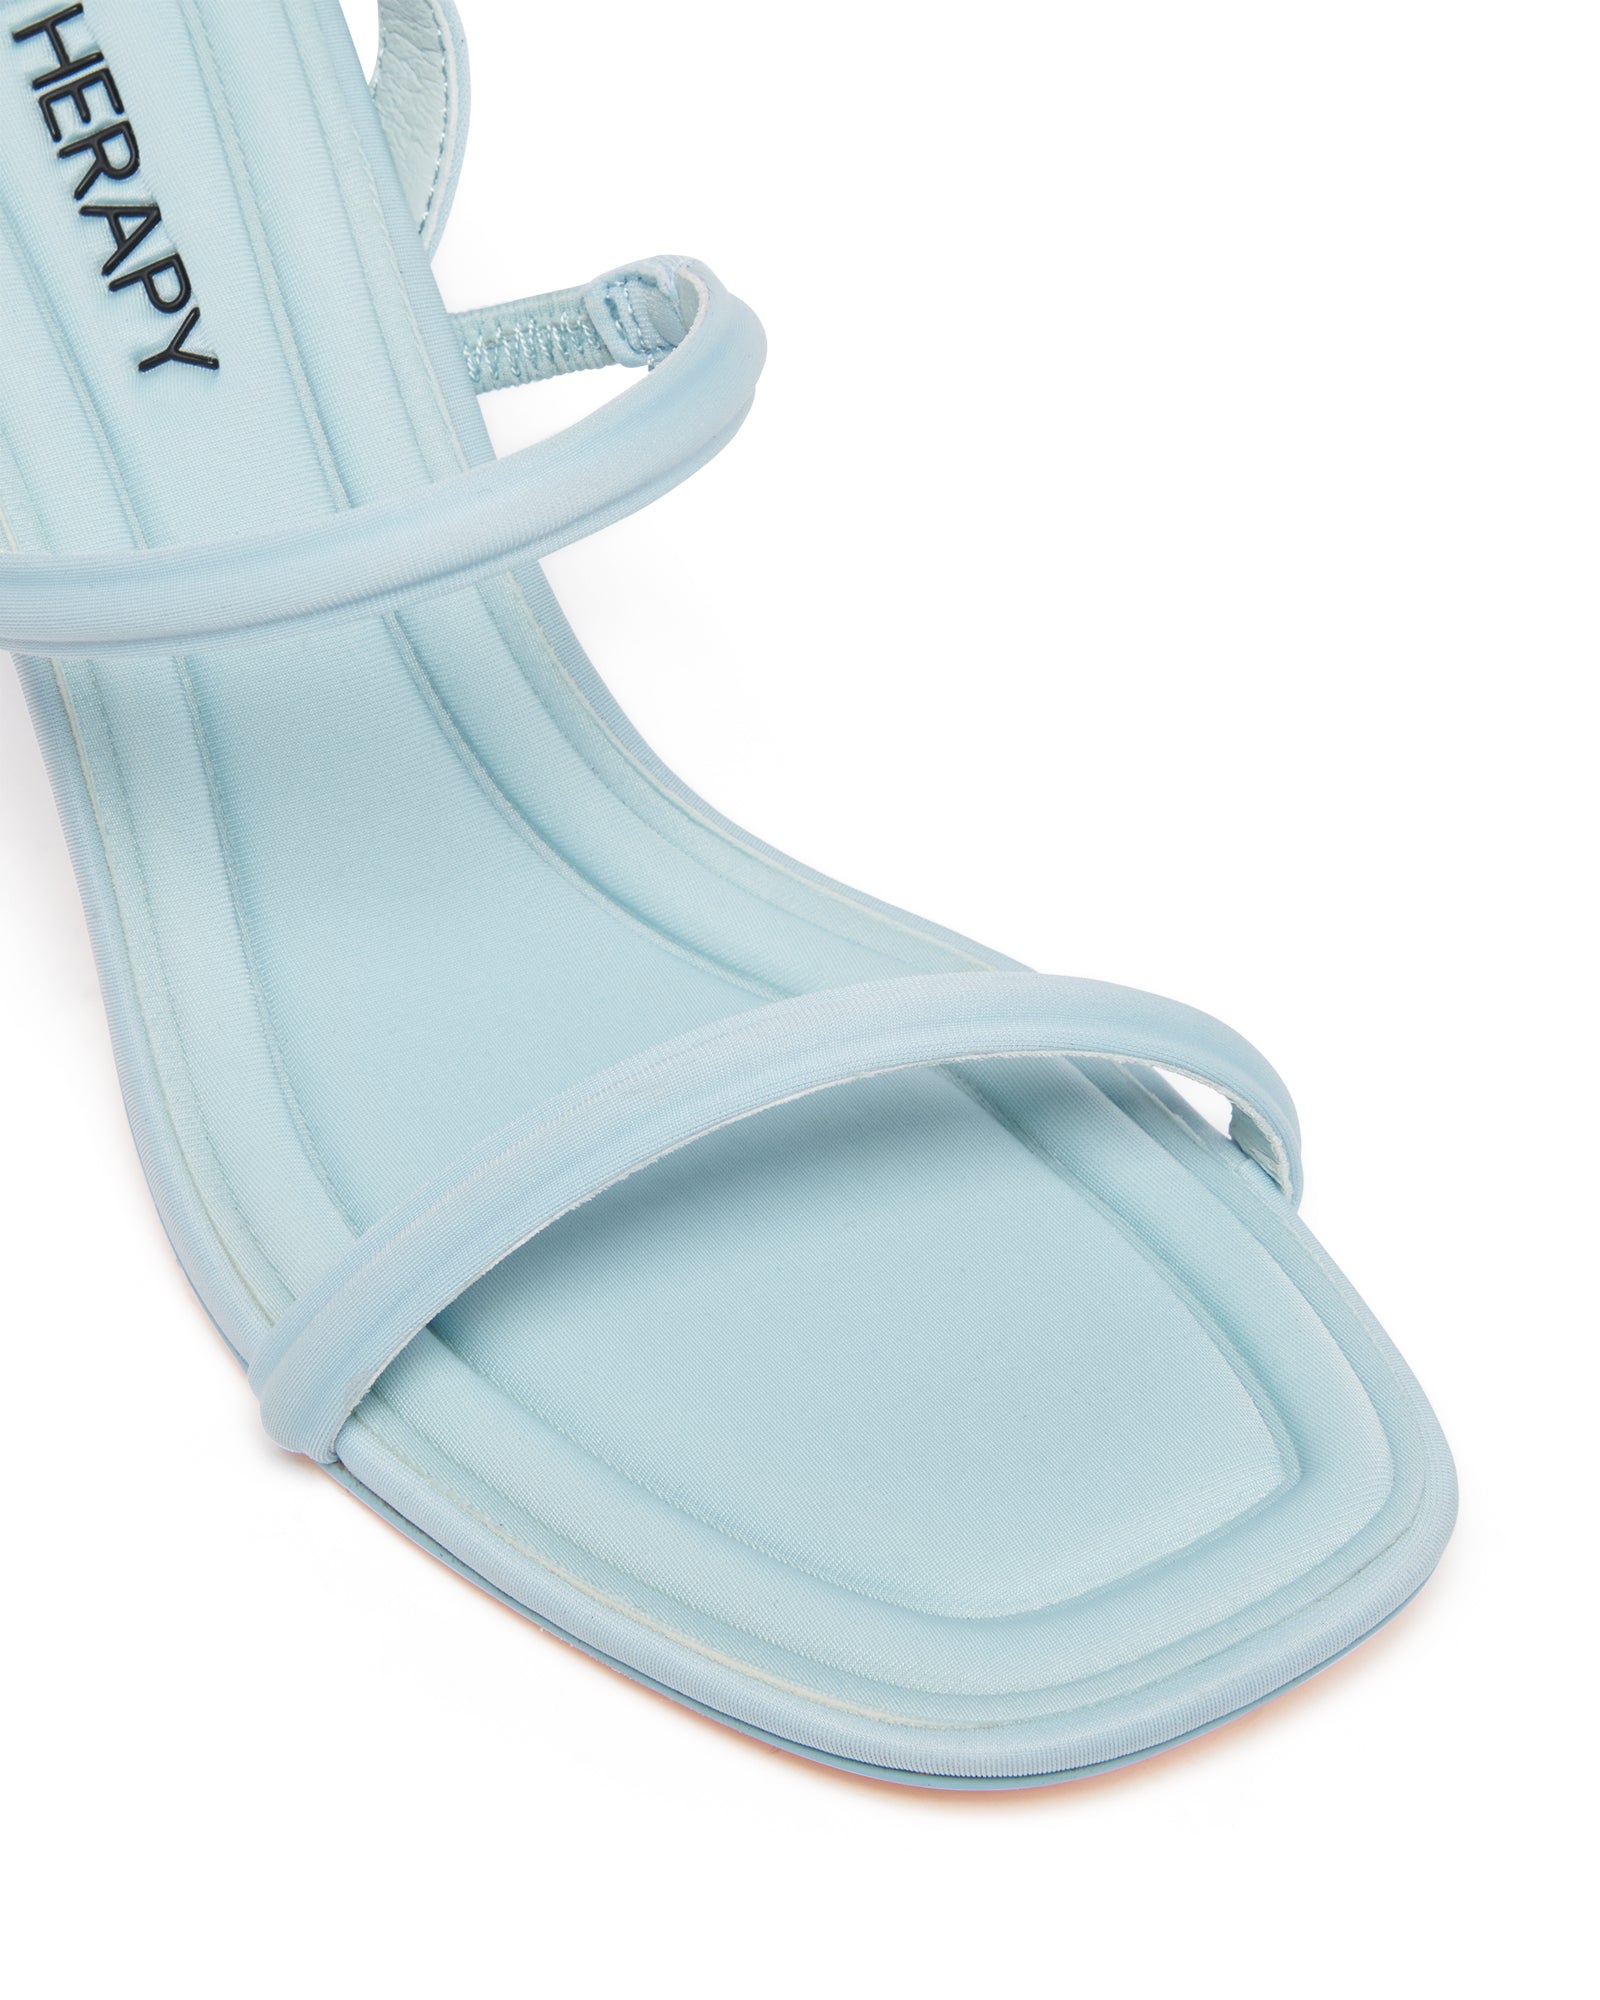 Therapy Shoes Teya Ice Blue Neoprene | Women's Heels | Sandals | Stiletto